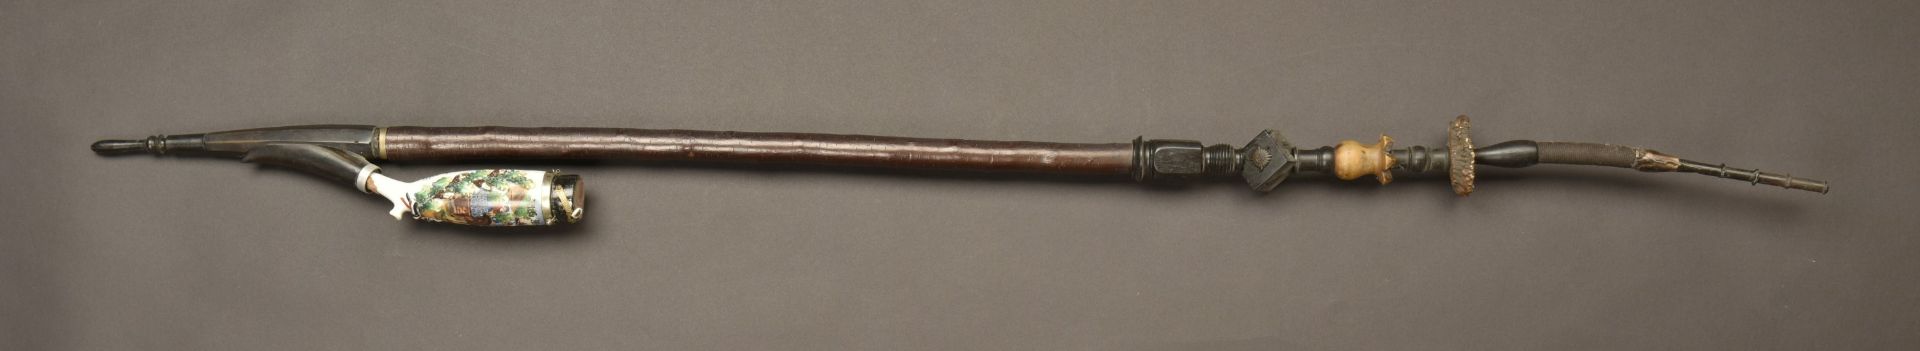 Pipe de reserviste du Husaren Regiment 13 de Mainz. German 13th hussars porcelan reservist pipe. Hus